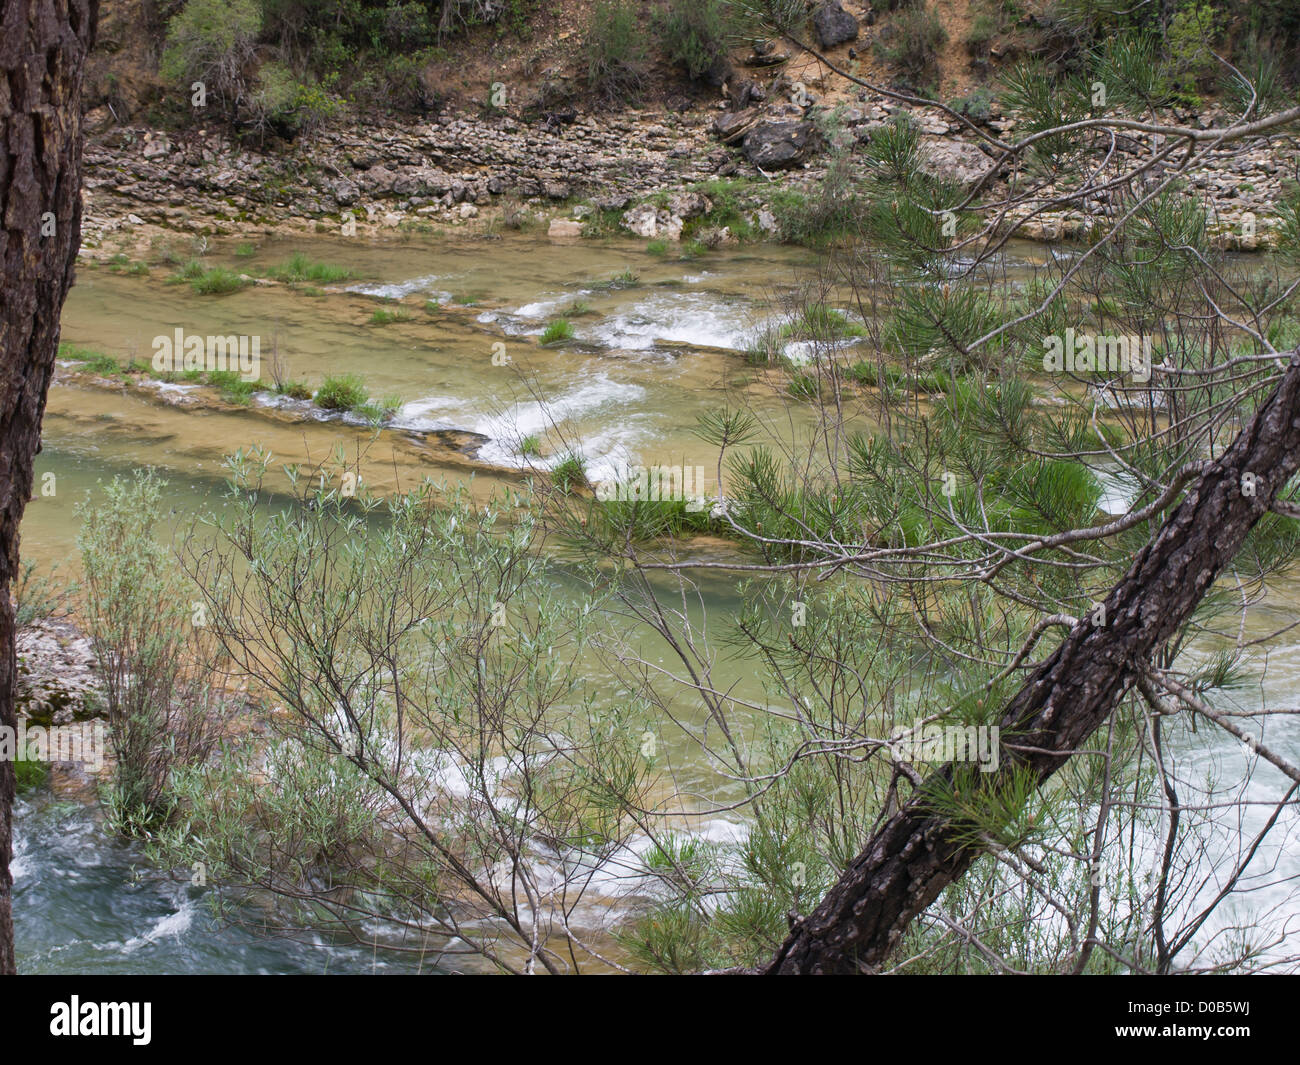 Hiking in Sierrra de Cazorla nature reserve in Andalusia Spain, view of rapids over rocks in the Rio Borosa river Stock Photo